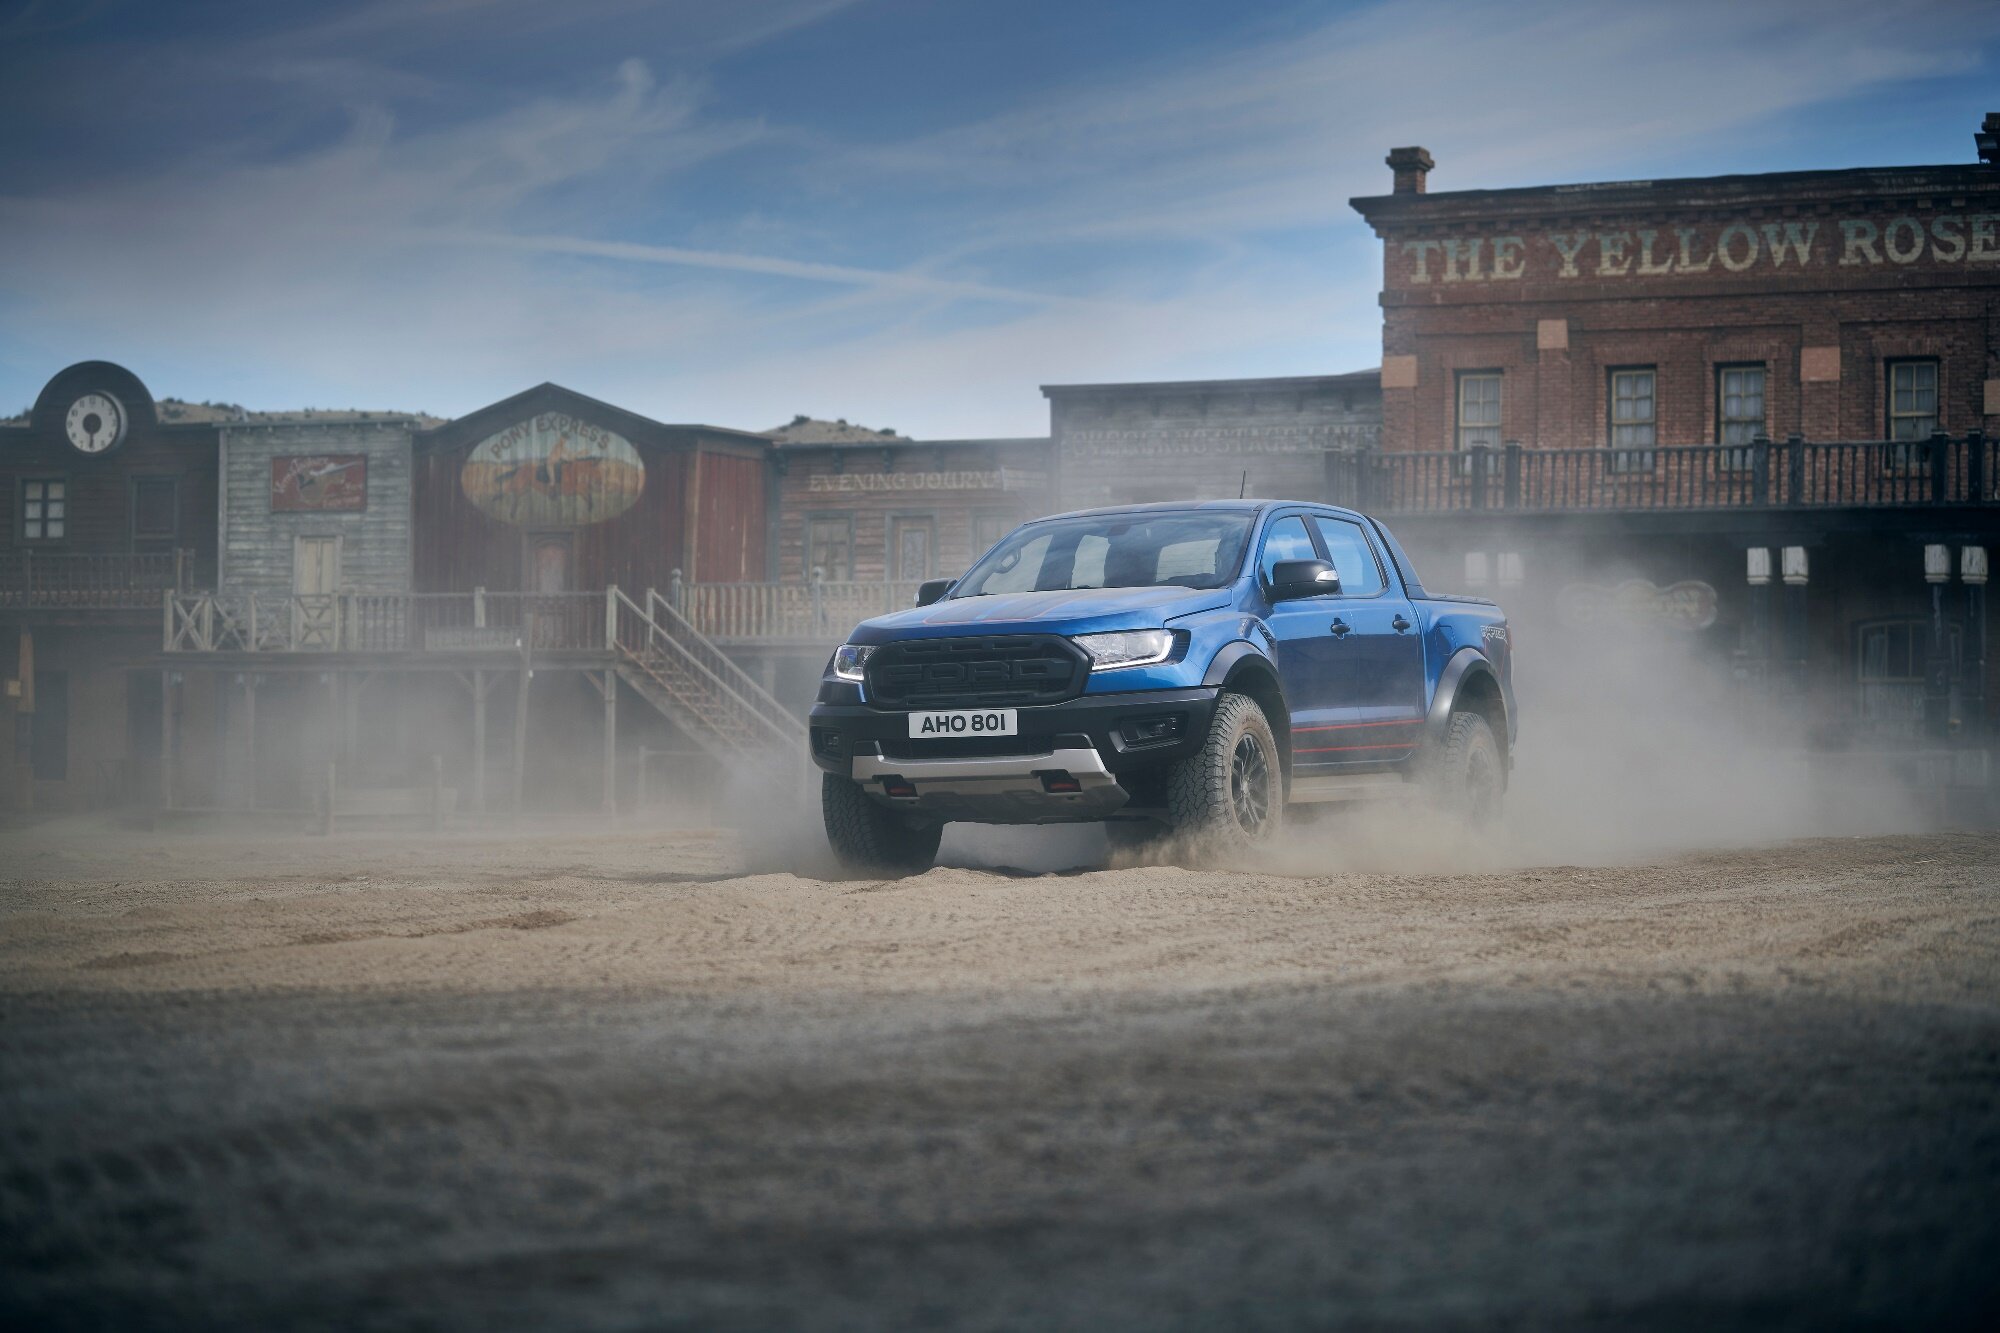 Ford představil limitovanou edici pick-upu Ranger Raptor